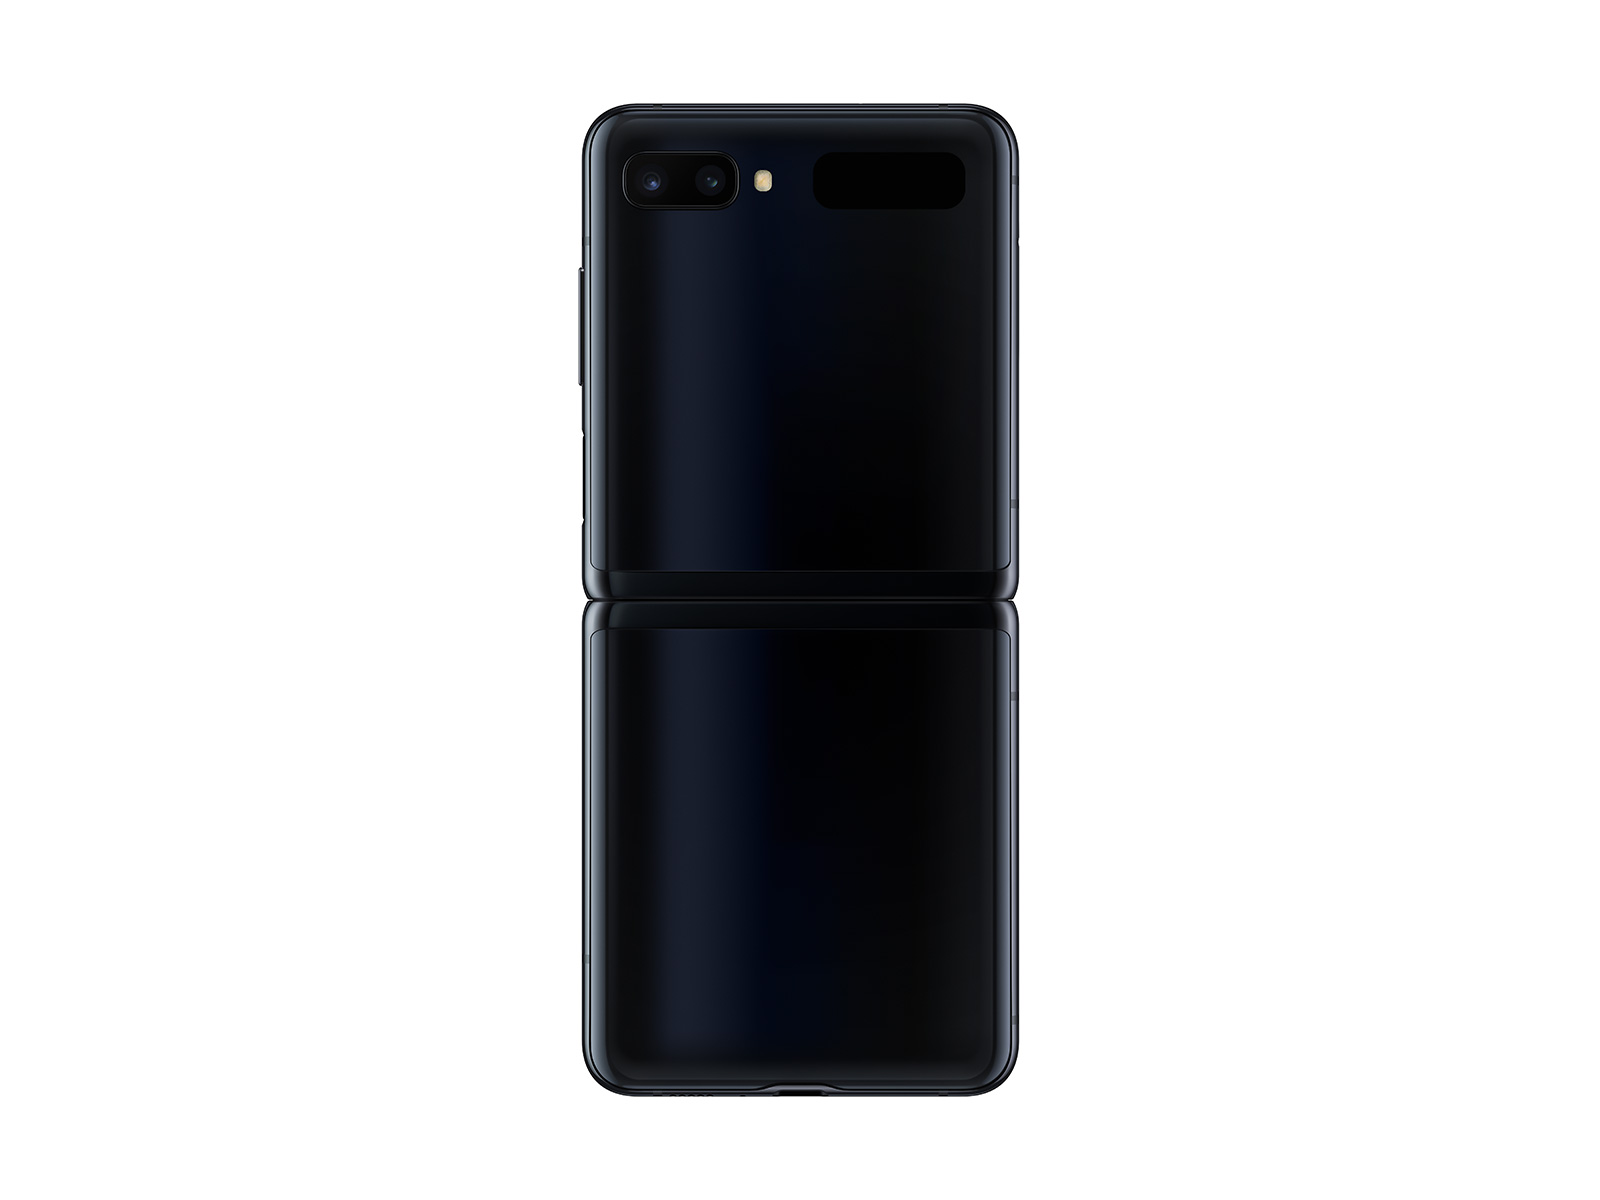 Single SIM Long-Lasting Battery US Warranty Folding Glass Technology Mirror Black Samsung Galaxy Z Flip Factory Unlocked Cell Phone |US Version 256GB of Storage